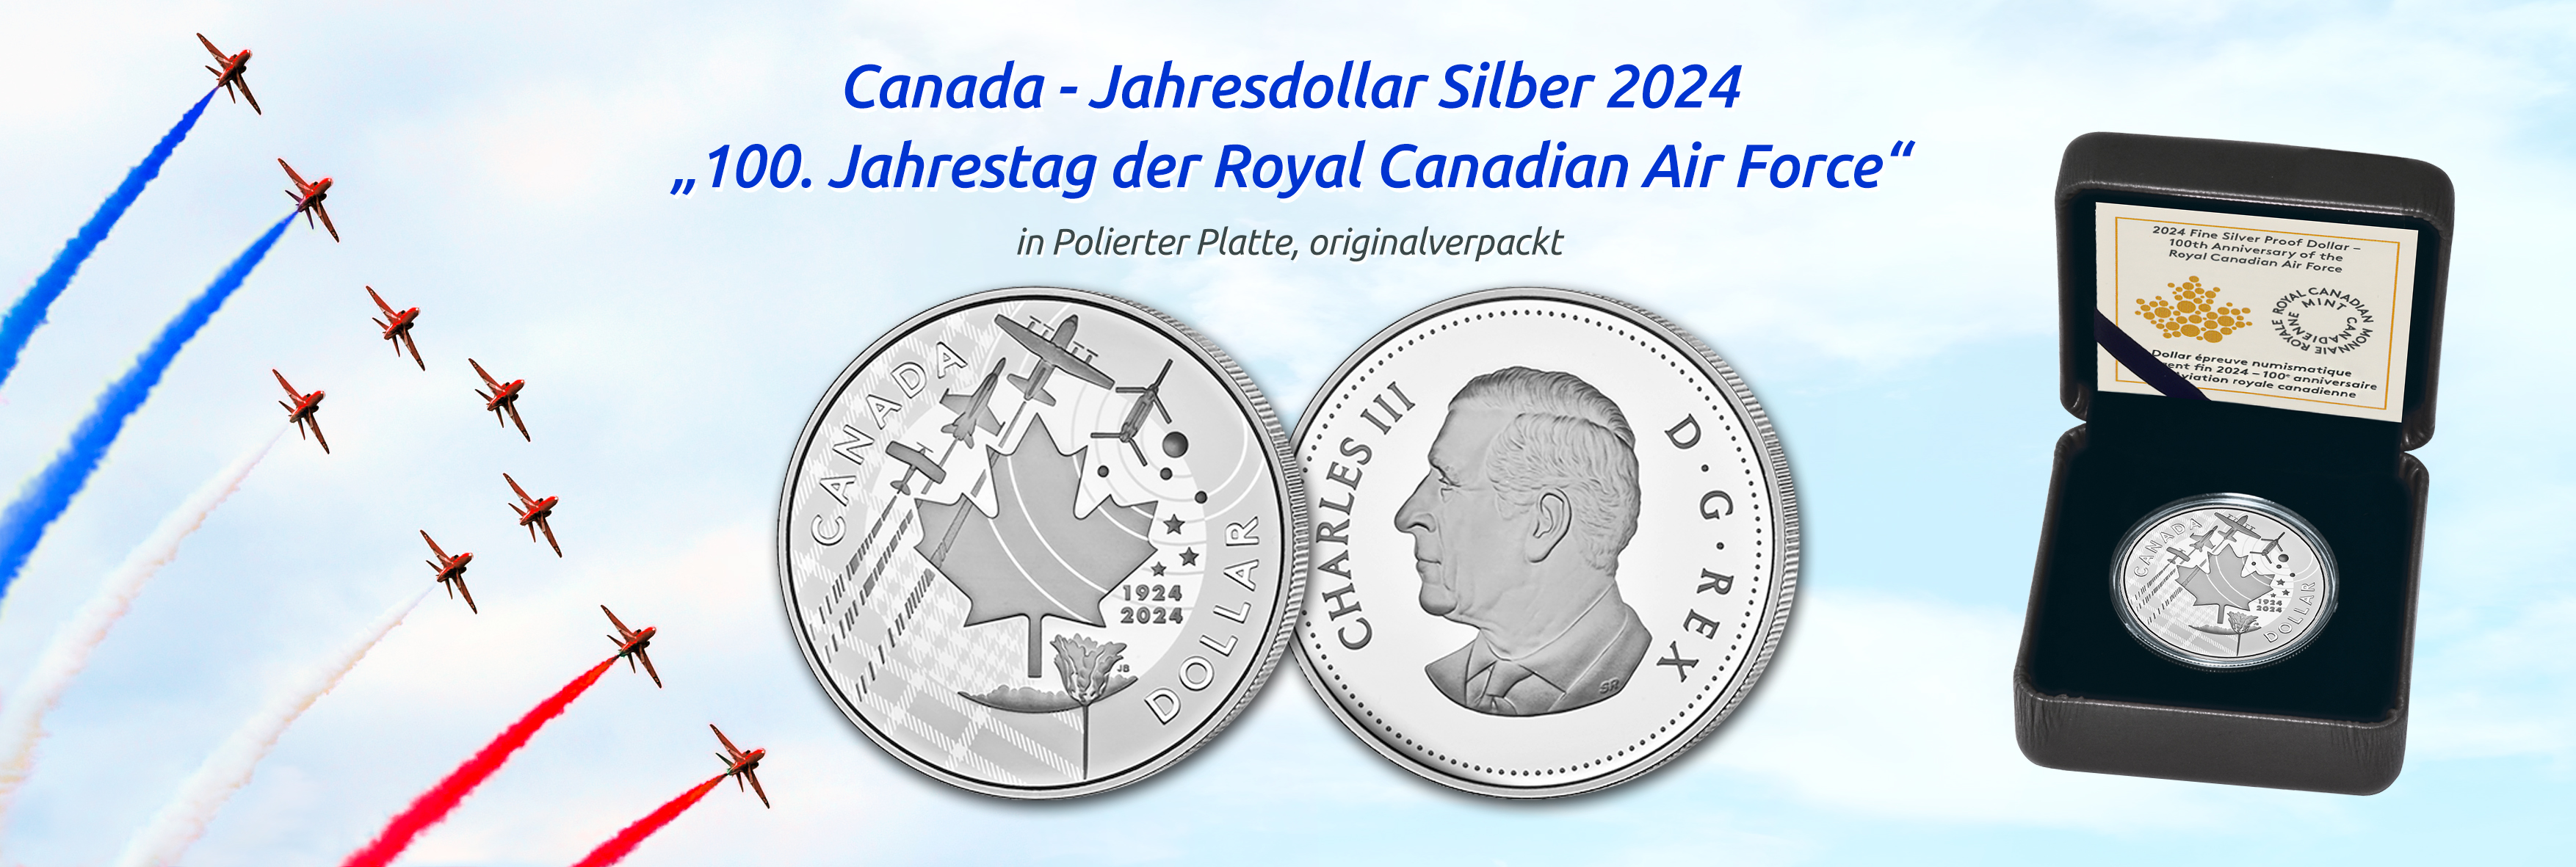 Canada - 1 Dollar Silbermünze 2024 in Polierter Platte, Royal Canadian Air Force, Jahresdollar, Rückseite König Charles III.